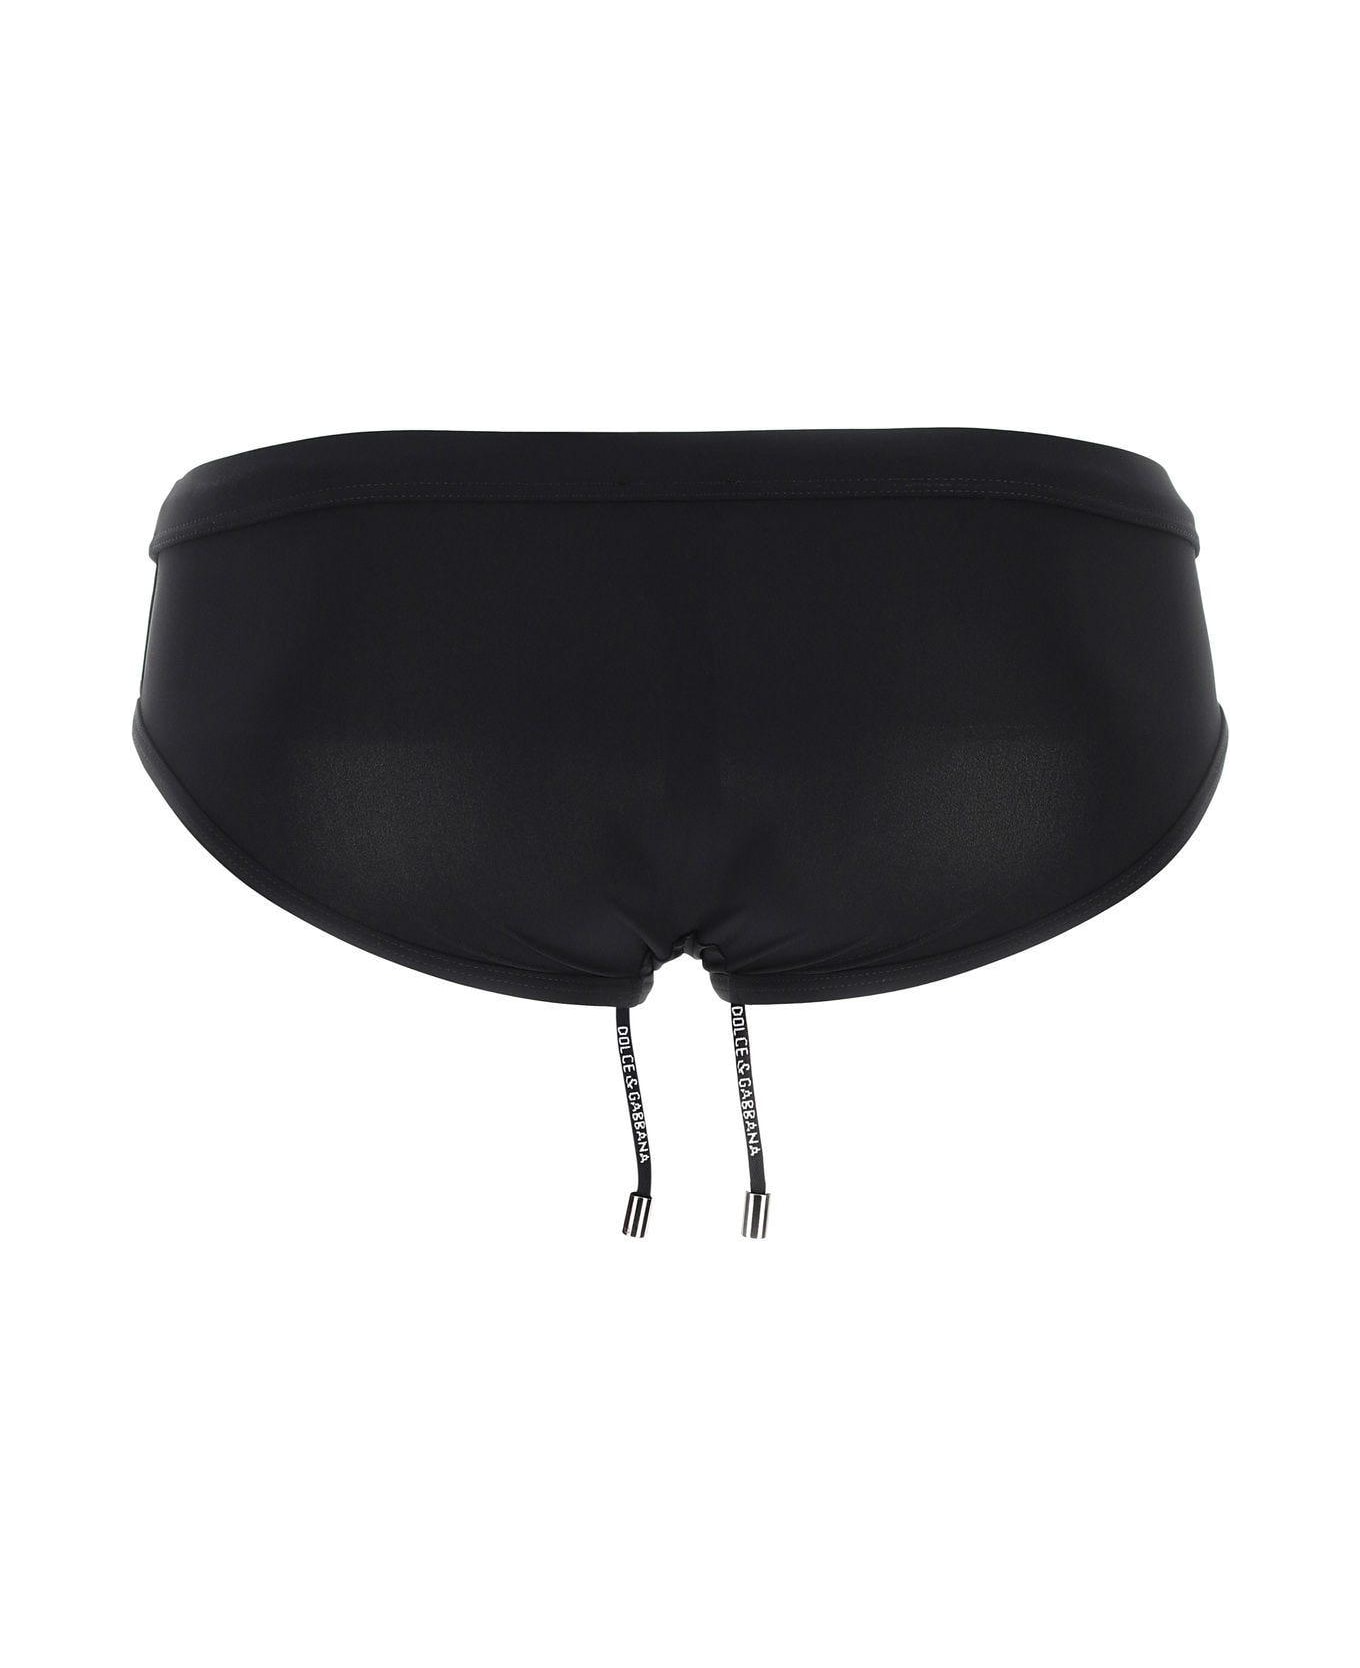 Dolce & Gabbana Black Stretch Nylon Swimming Brief - Black ショーツ